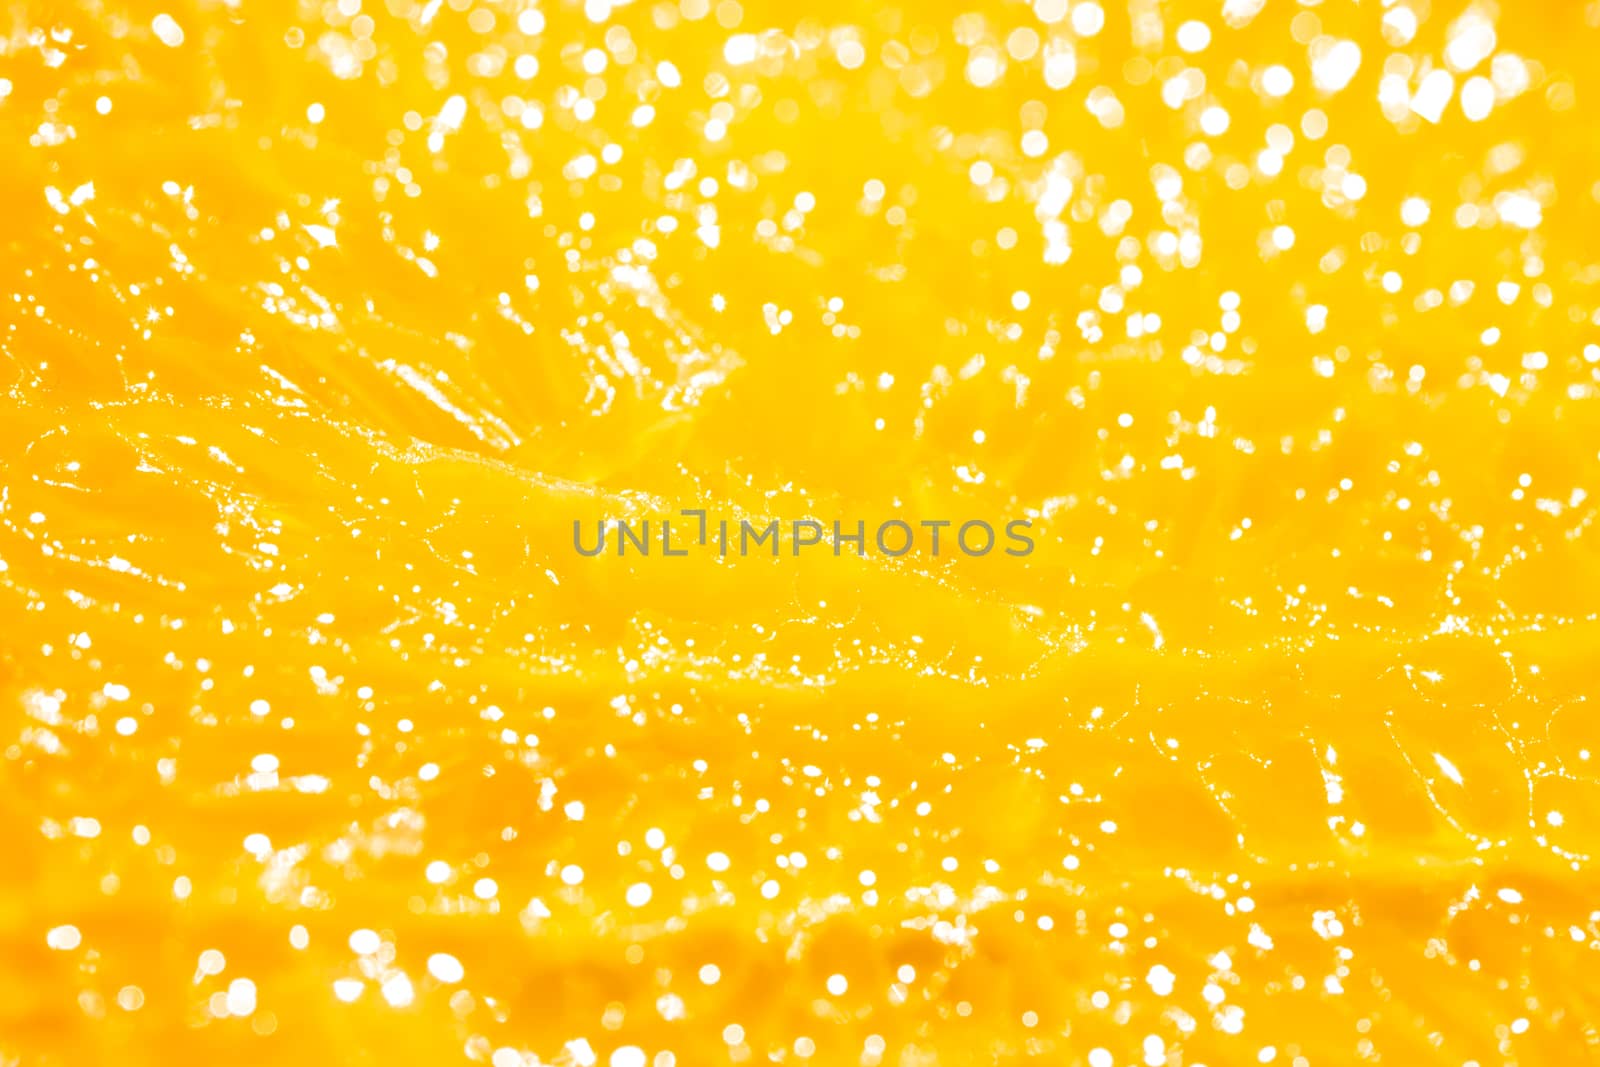 The shiny orange by Chattranusorn09